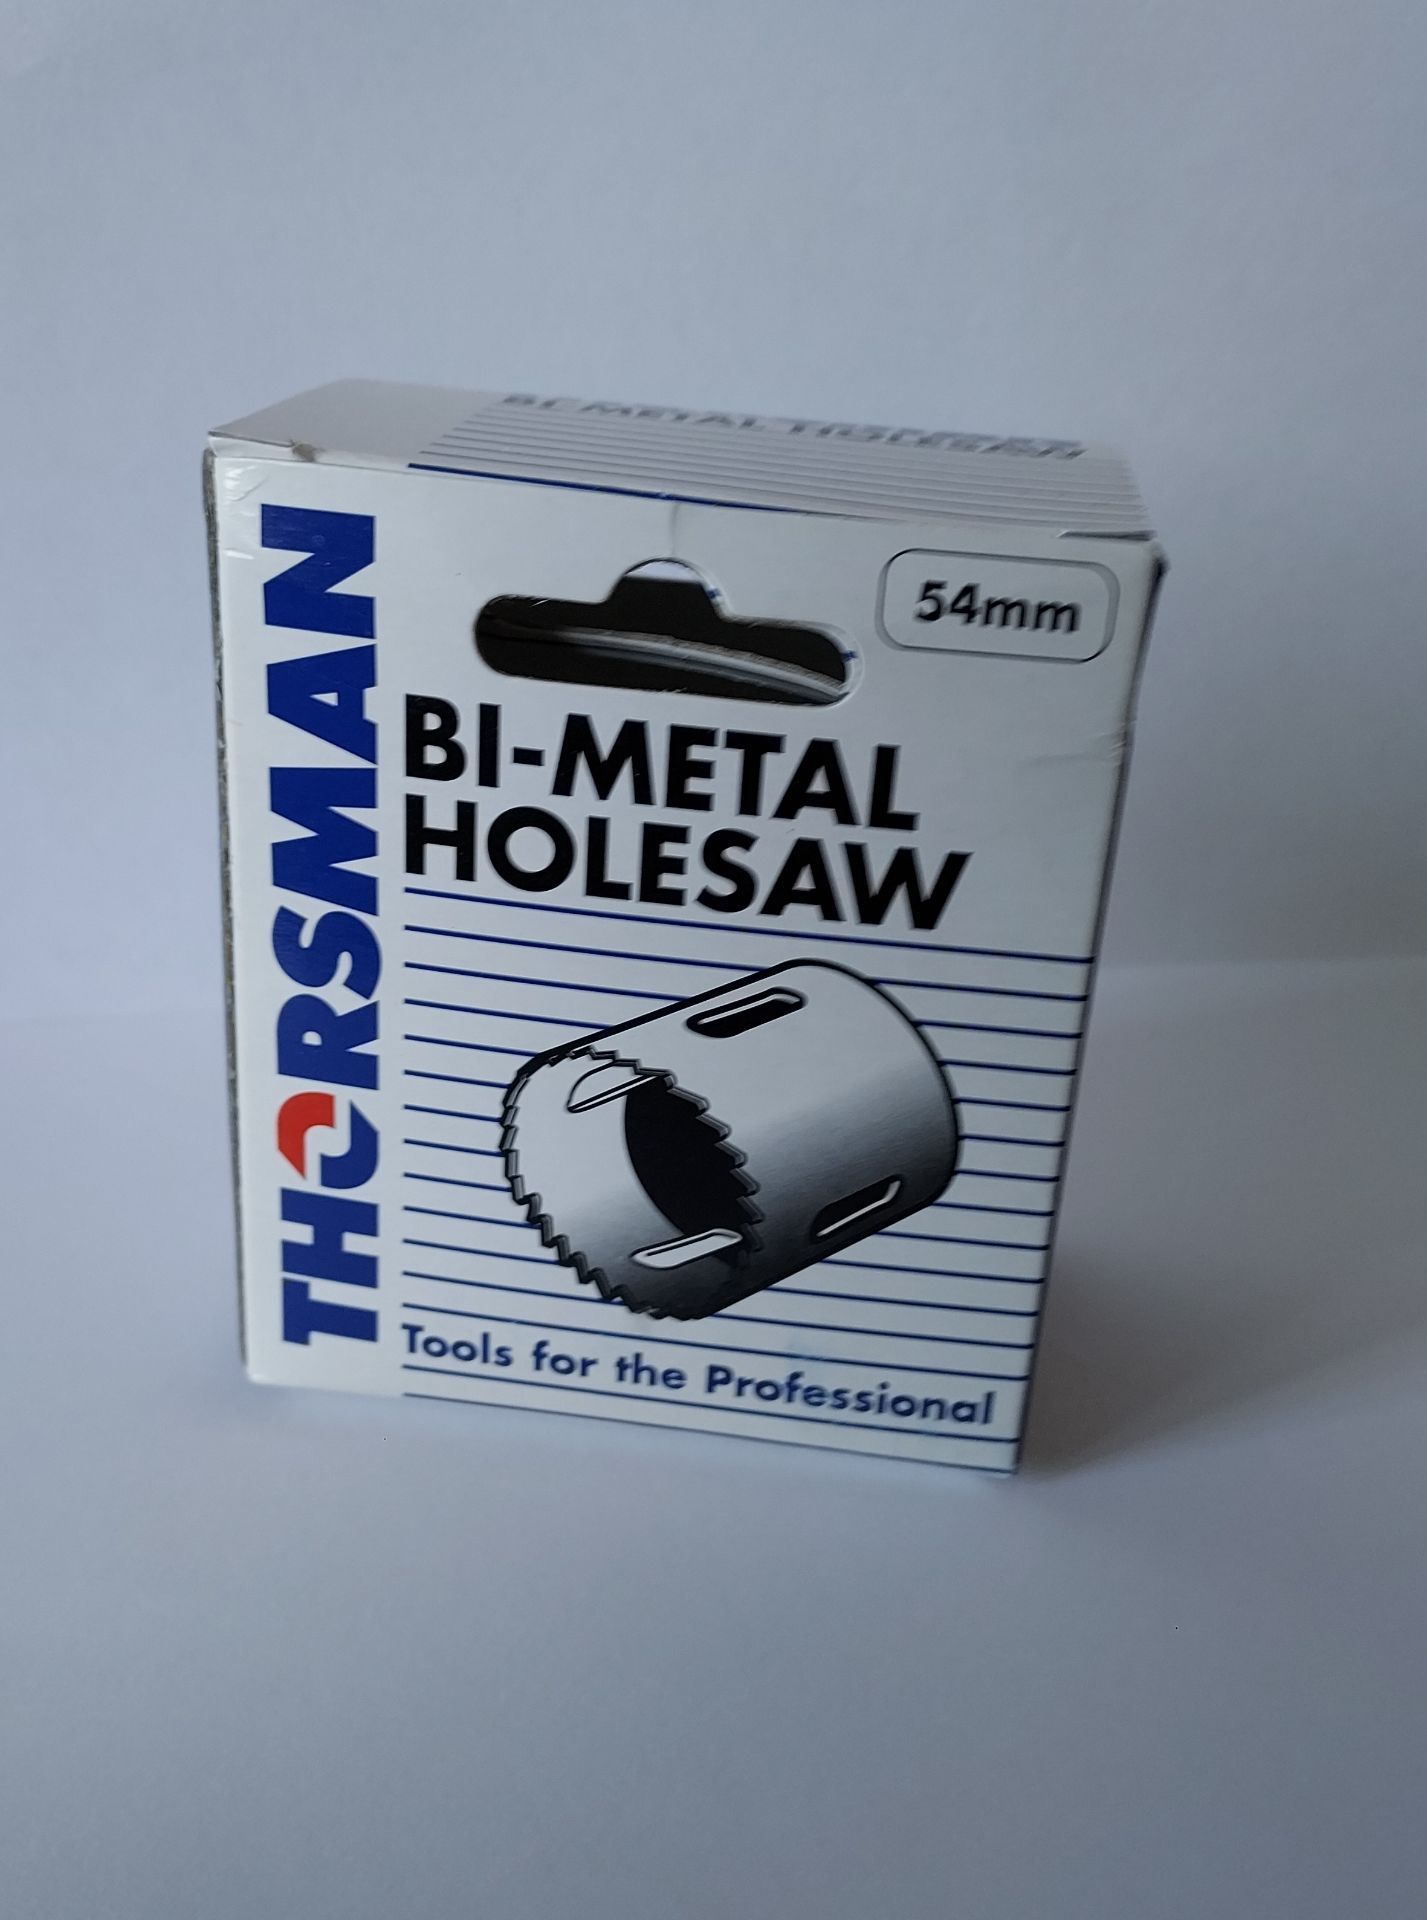 2 x Thorsman Bi-Metal Hole saw 54 Mm-- Retail value £4.99 each